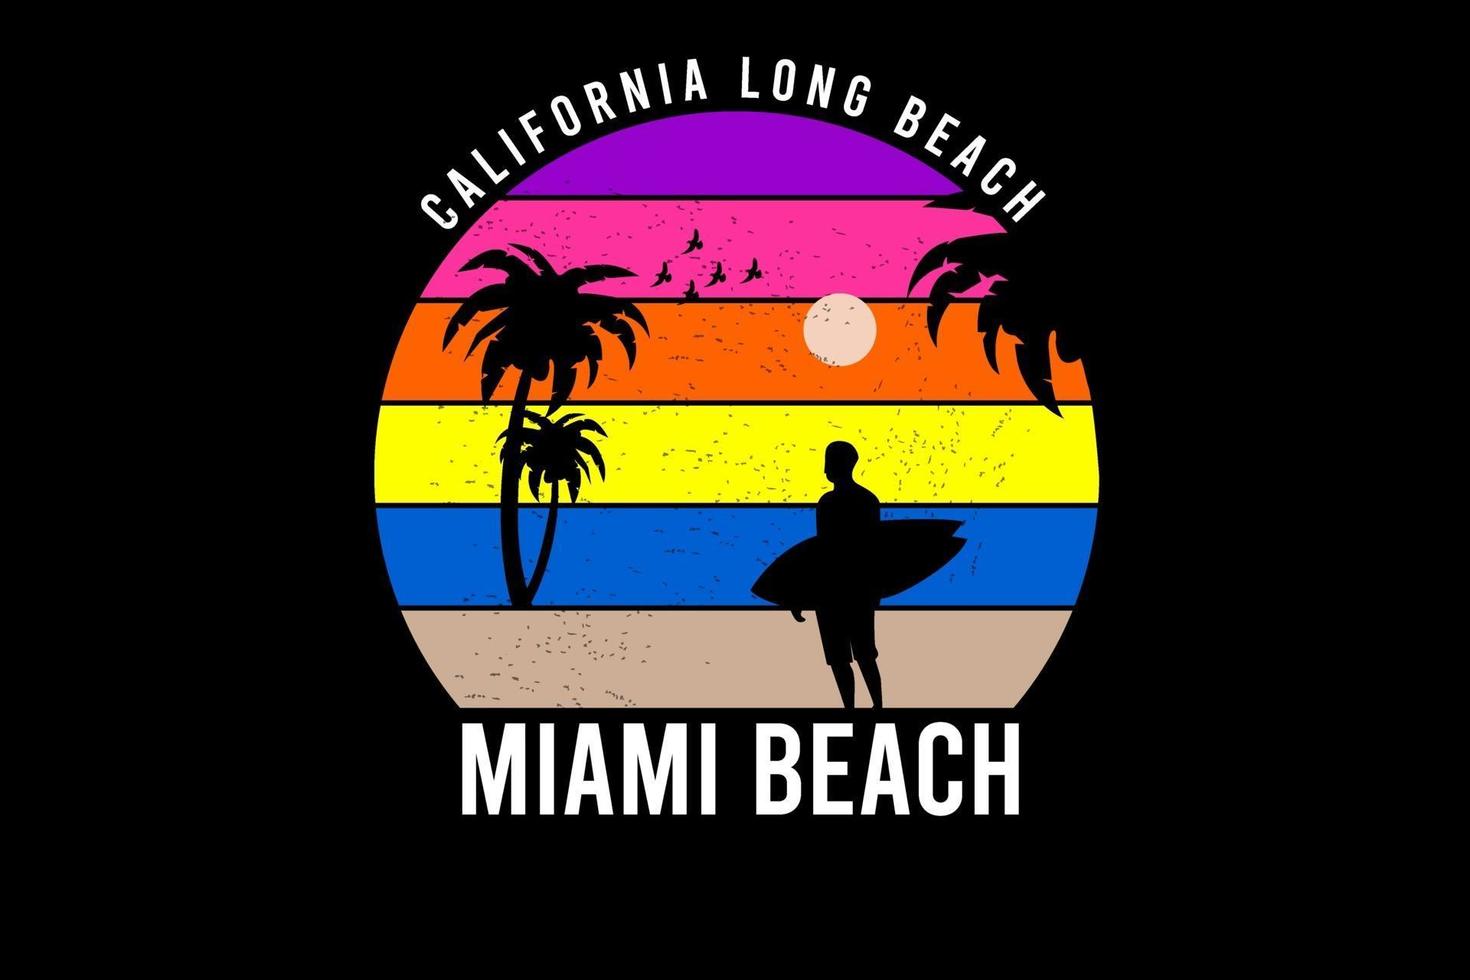 camiseta california long beach miami beach color amarillo y naranja violeta vector